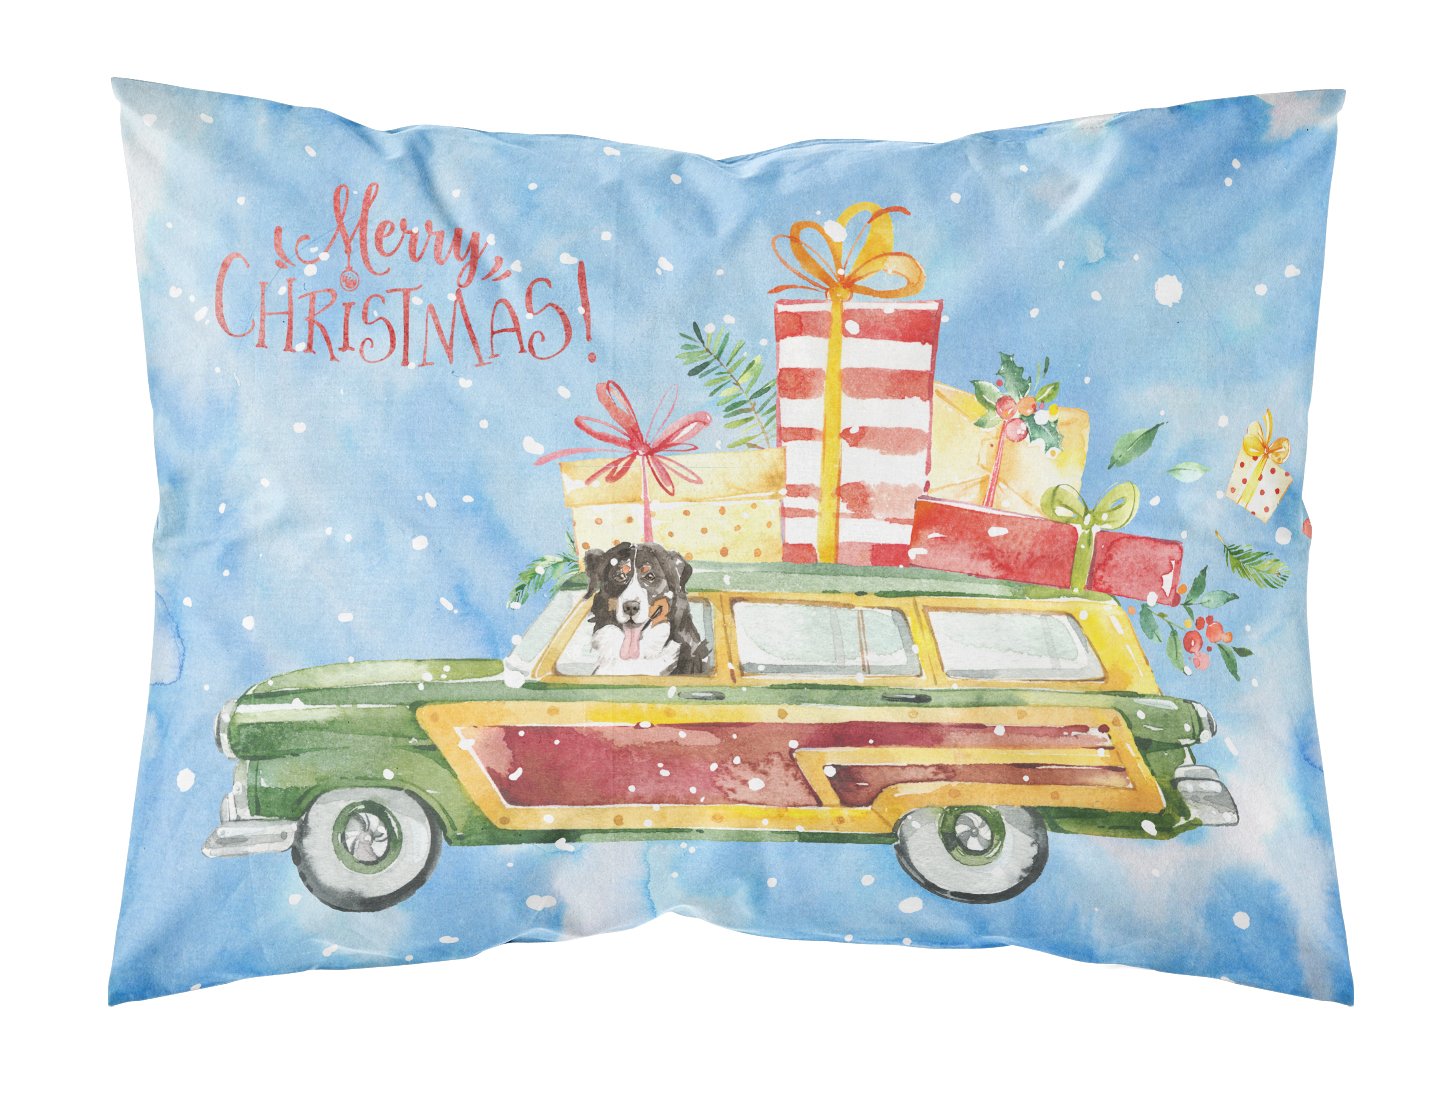 Merry Christmas Bernese Mountain Dog Fabric Standard Pillowcase CK2394PILLOWCASE by Caroline's Treasures